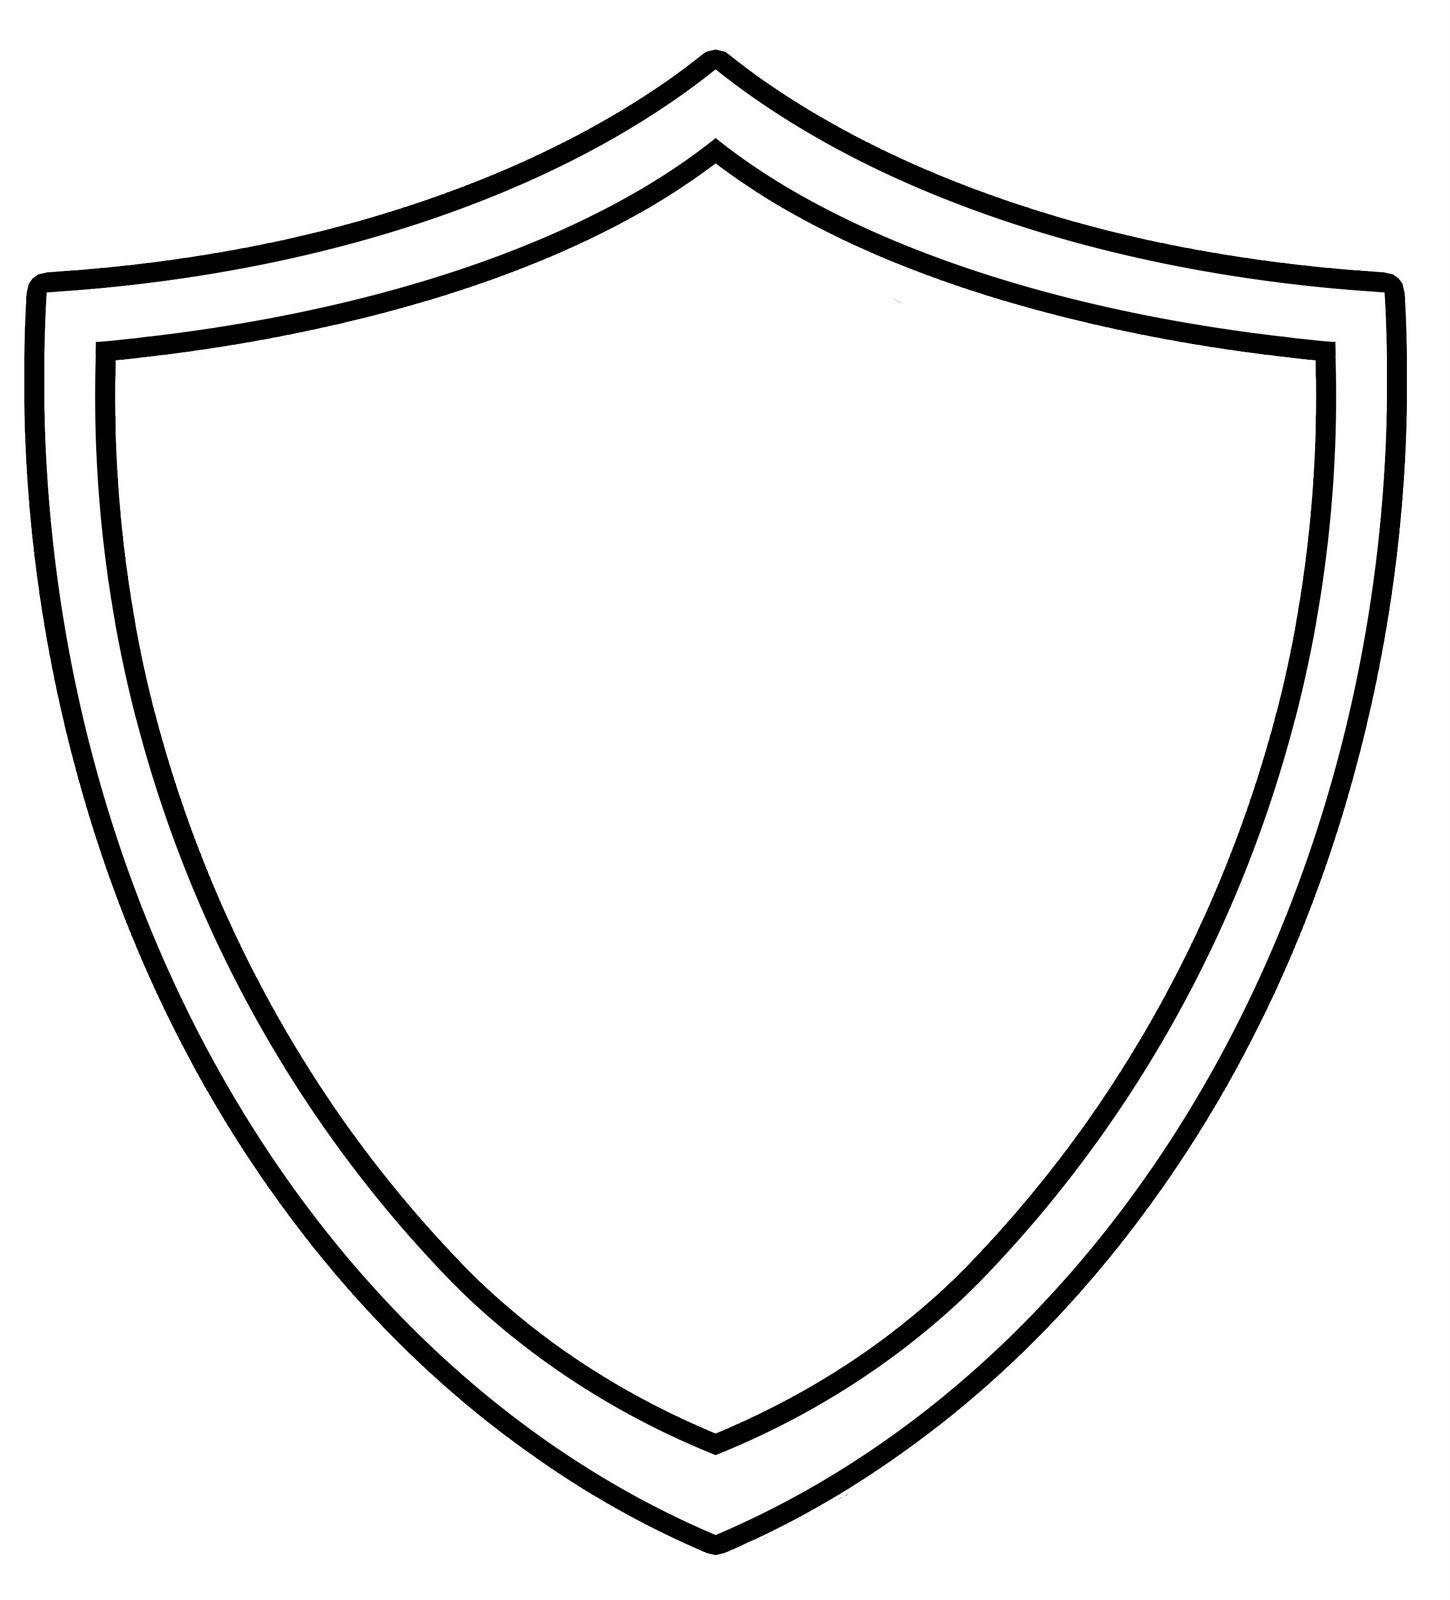 Empty Shield Logo - Free Blank Superman Logo, Download Free Clip Art, Free Clip Art on ...